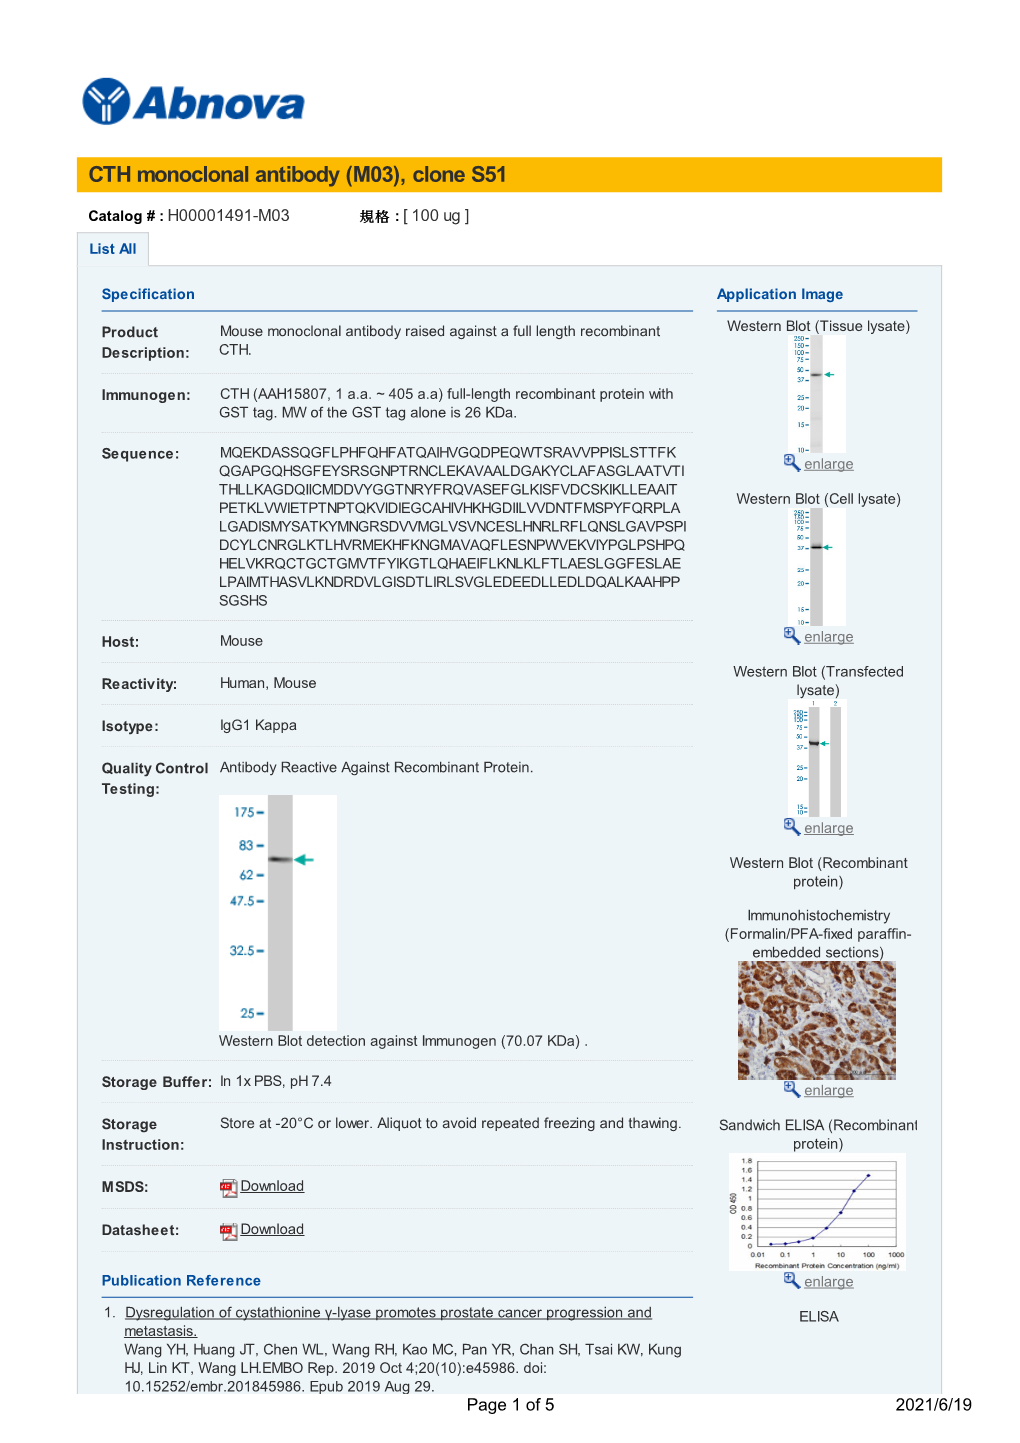 CTH Monoclonal Antibody (M03), Clone S51